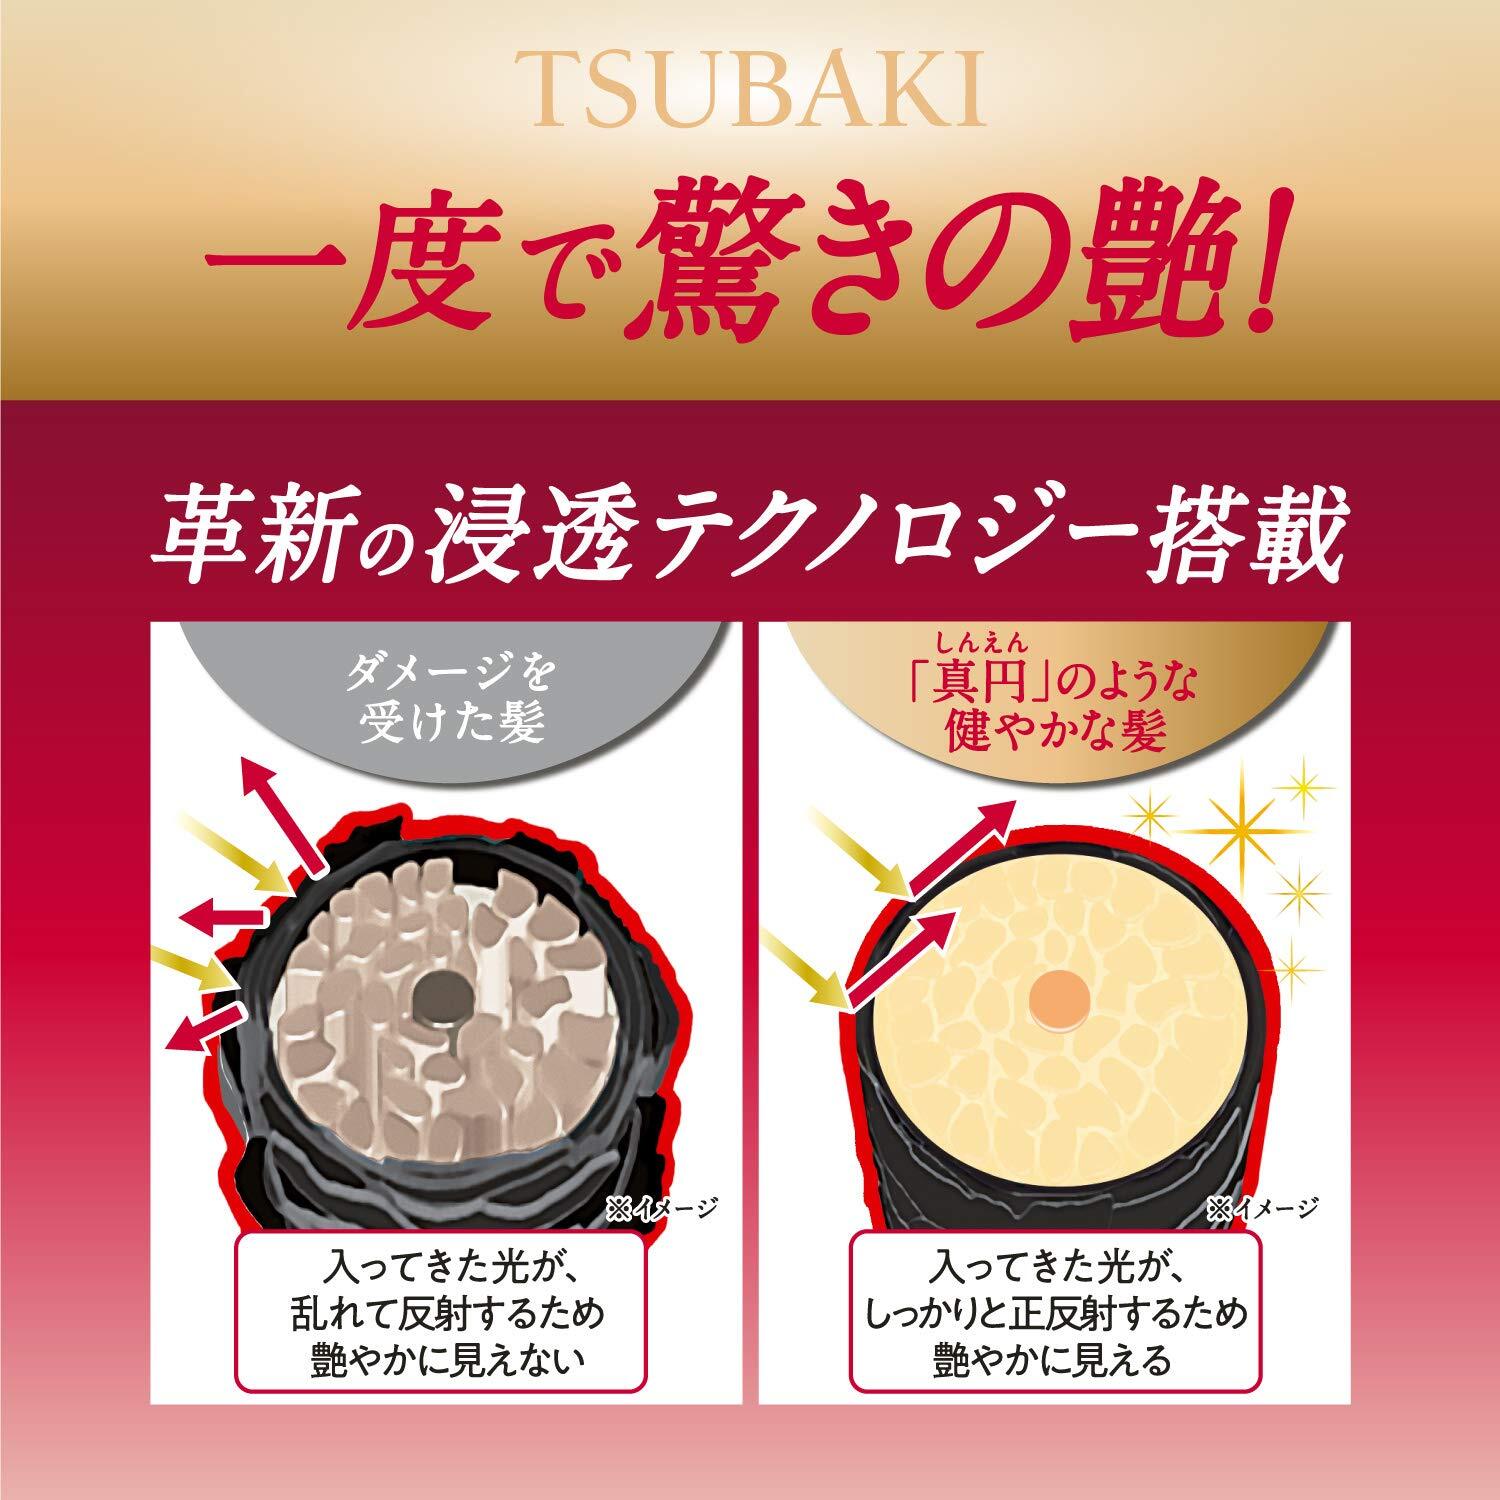 SHISEIDO Tsubaki Premium Repair Hair Treatment 180g